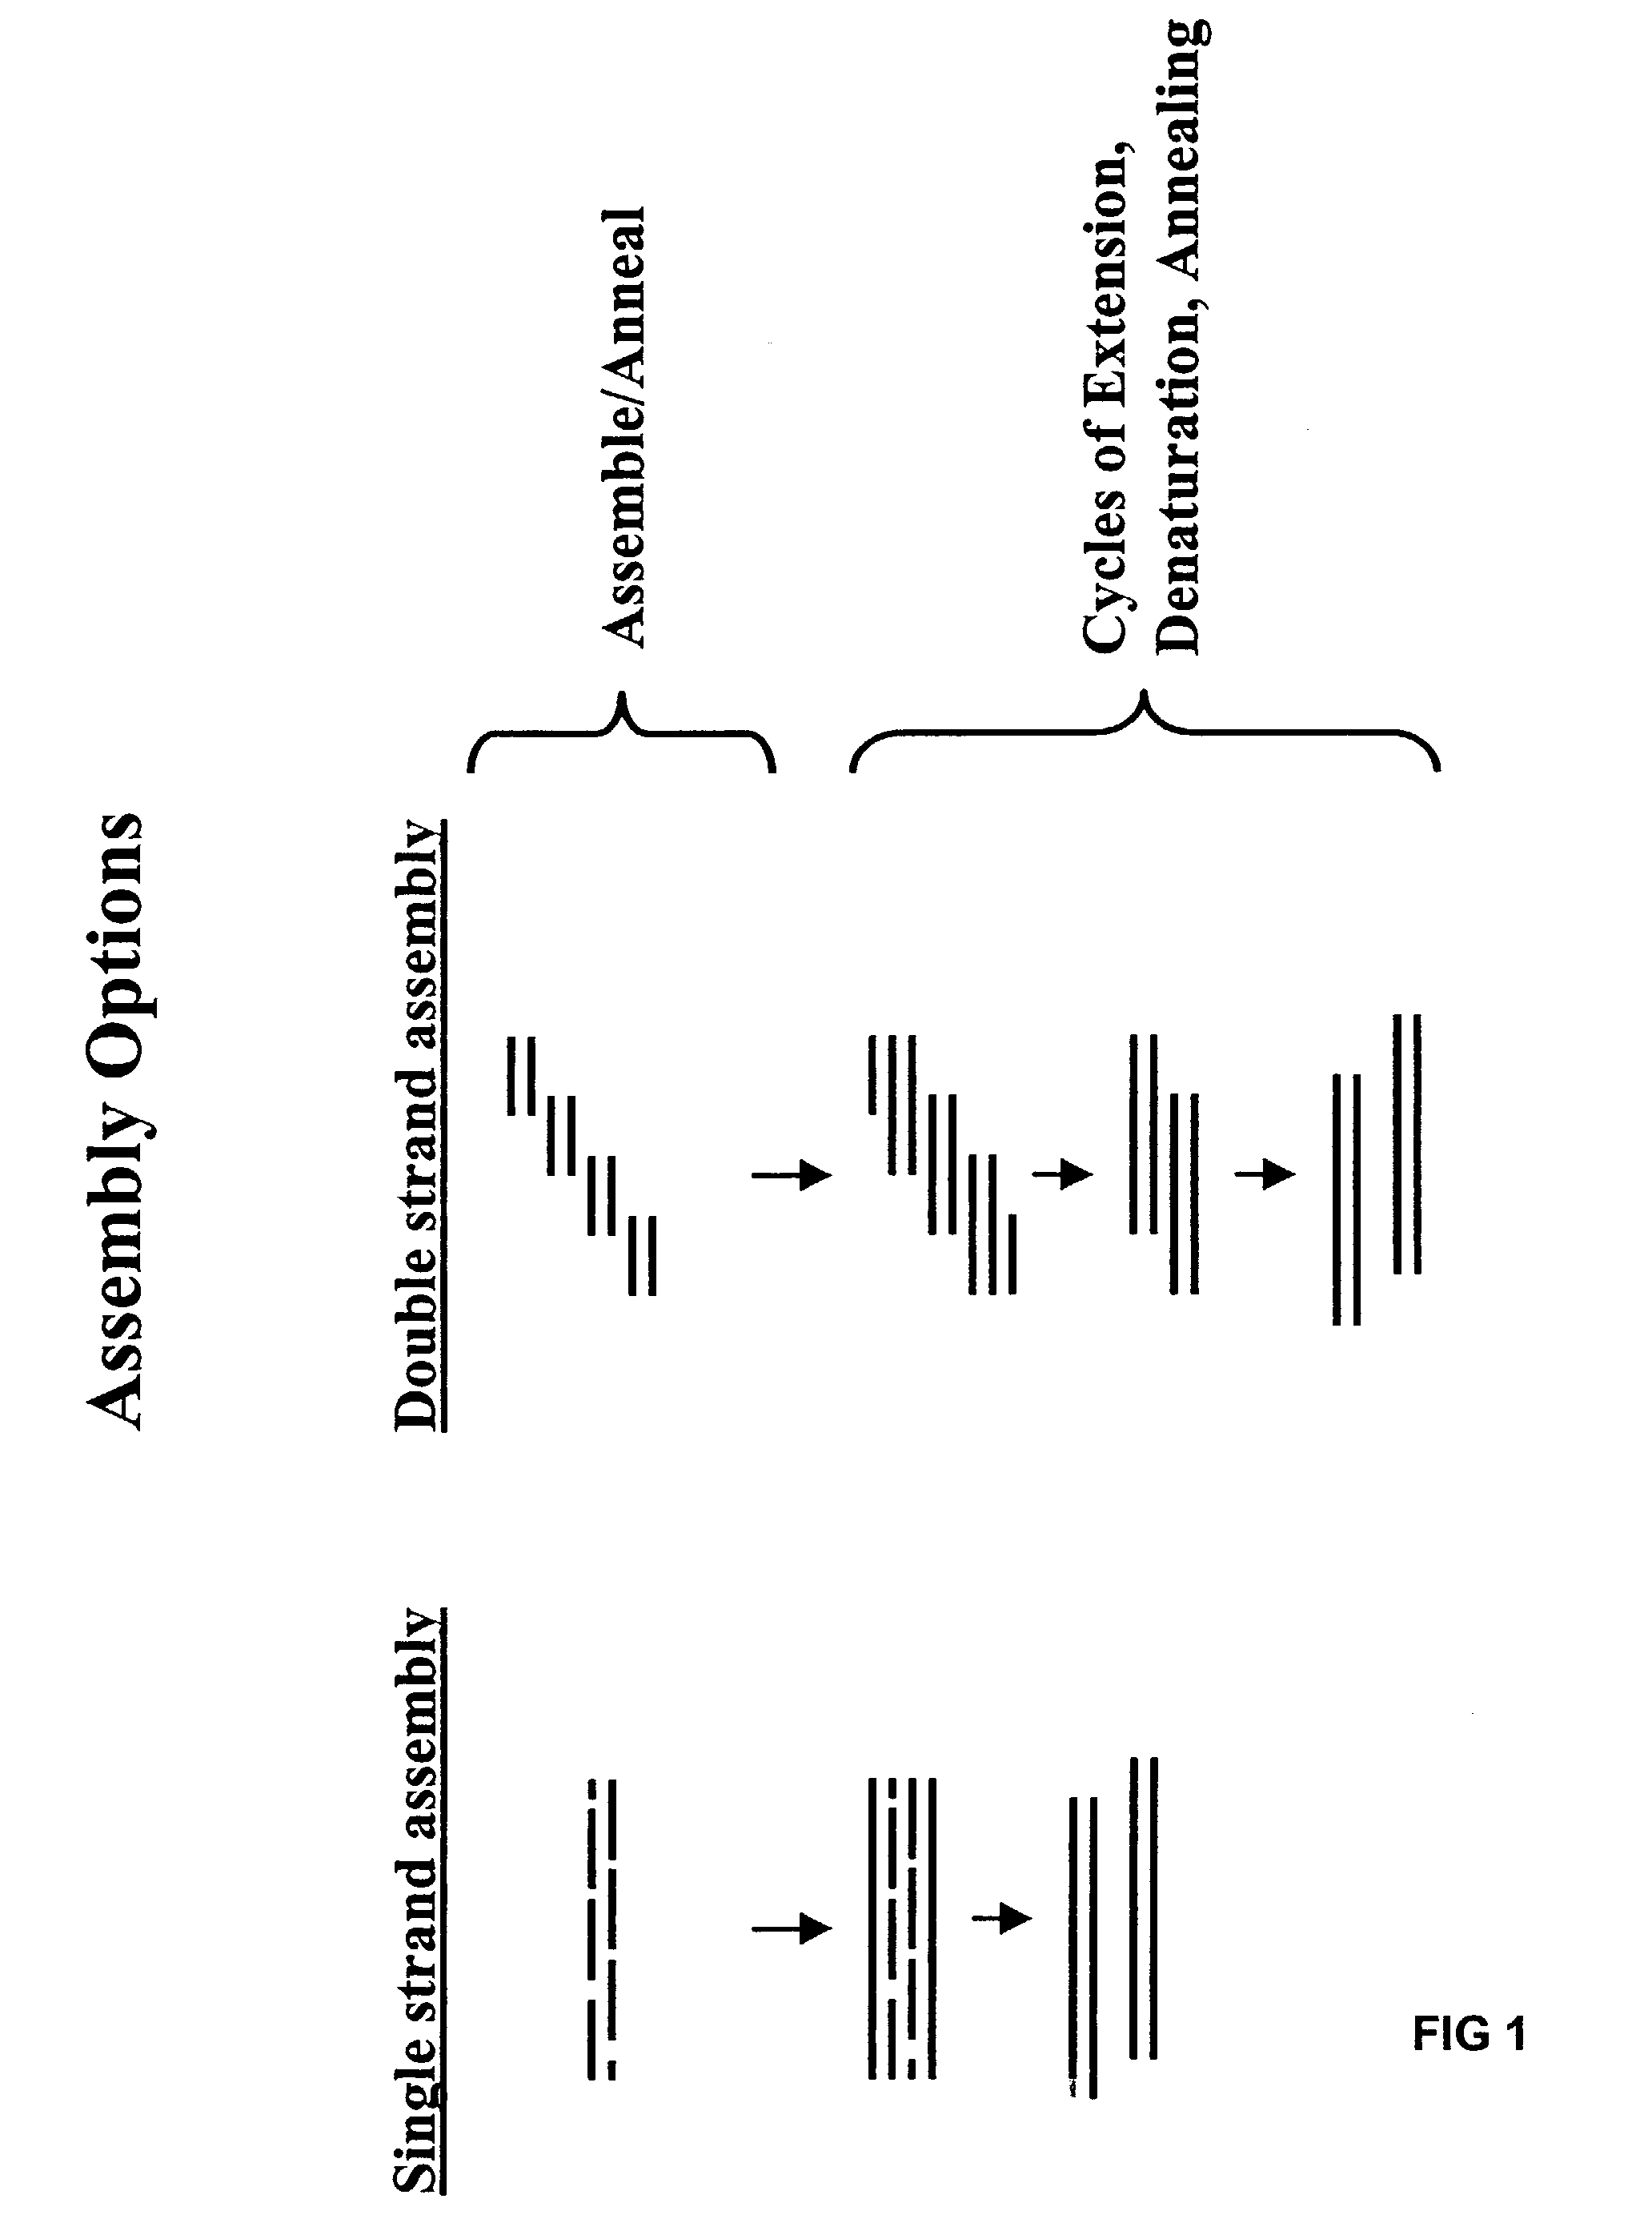 Method of error reduction in nucleic acid populations